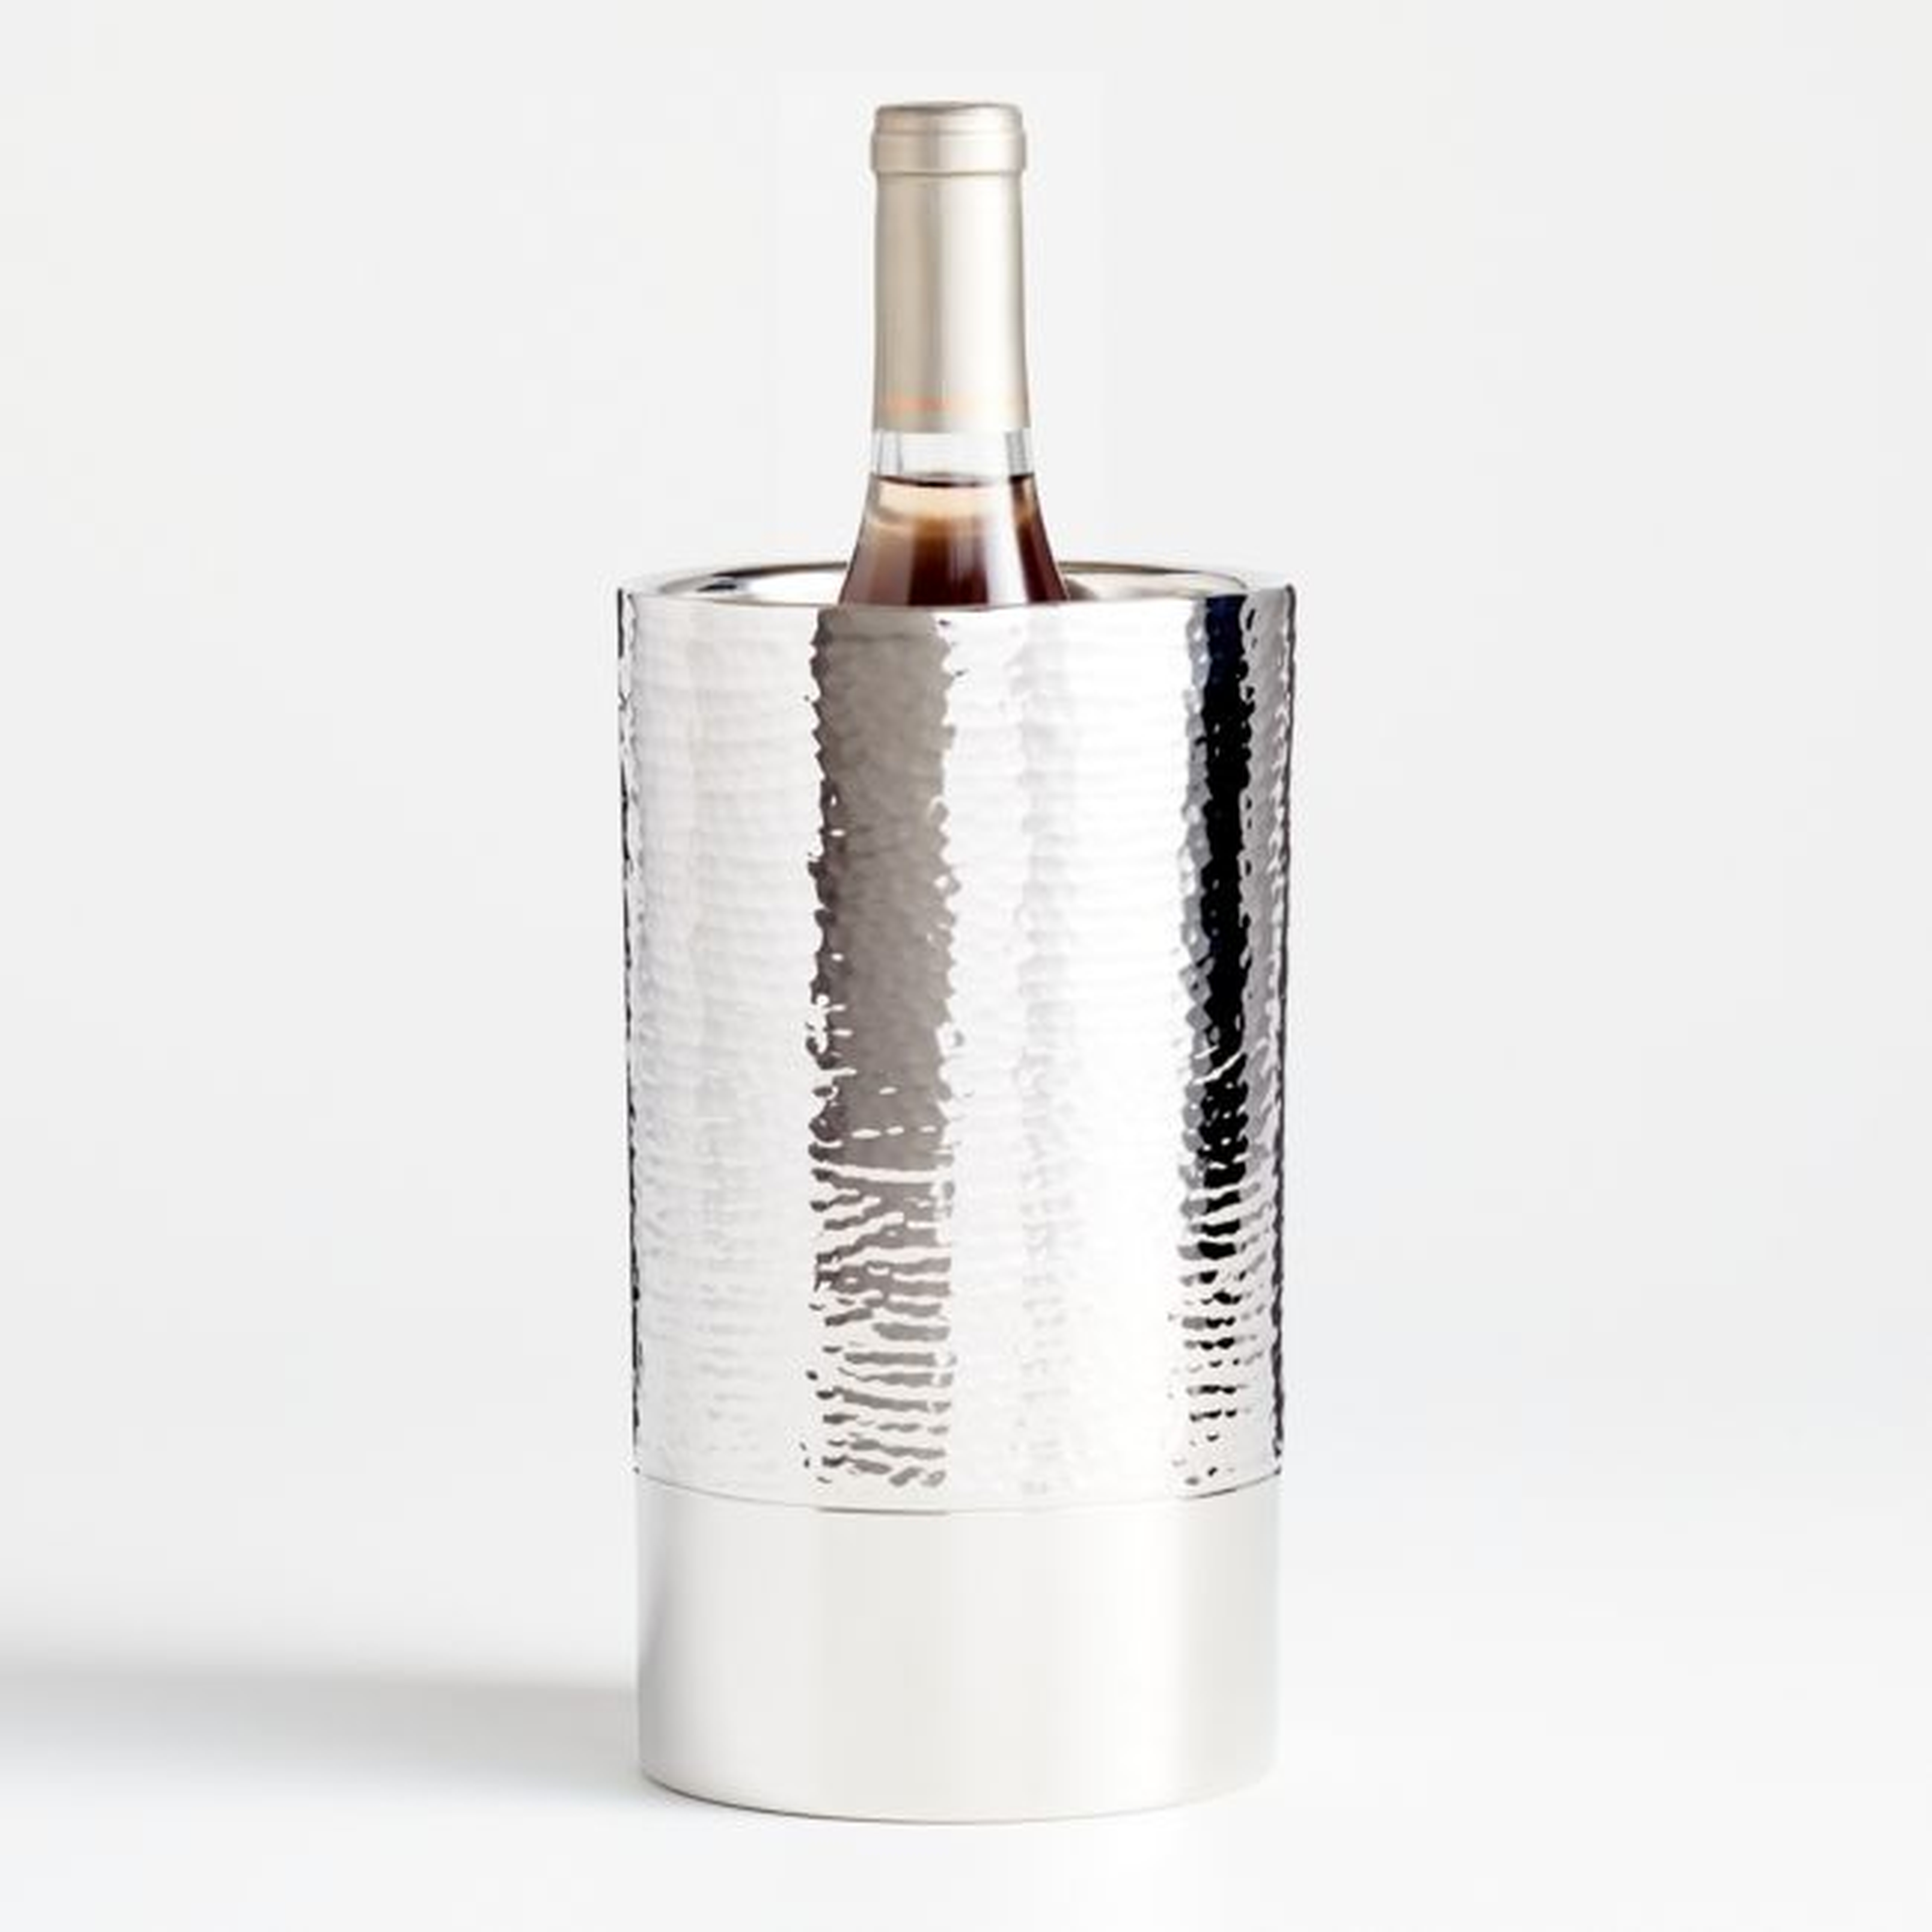 Graham Wine Cooler - Crate and Barrel